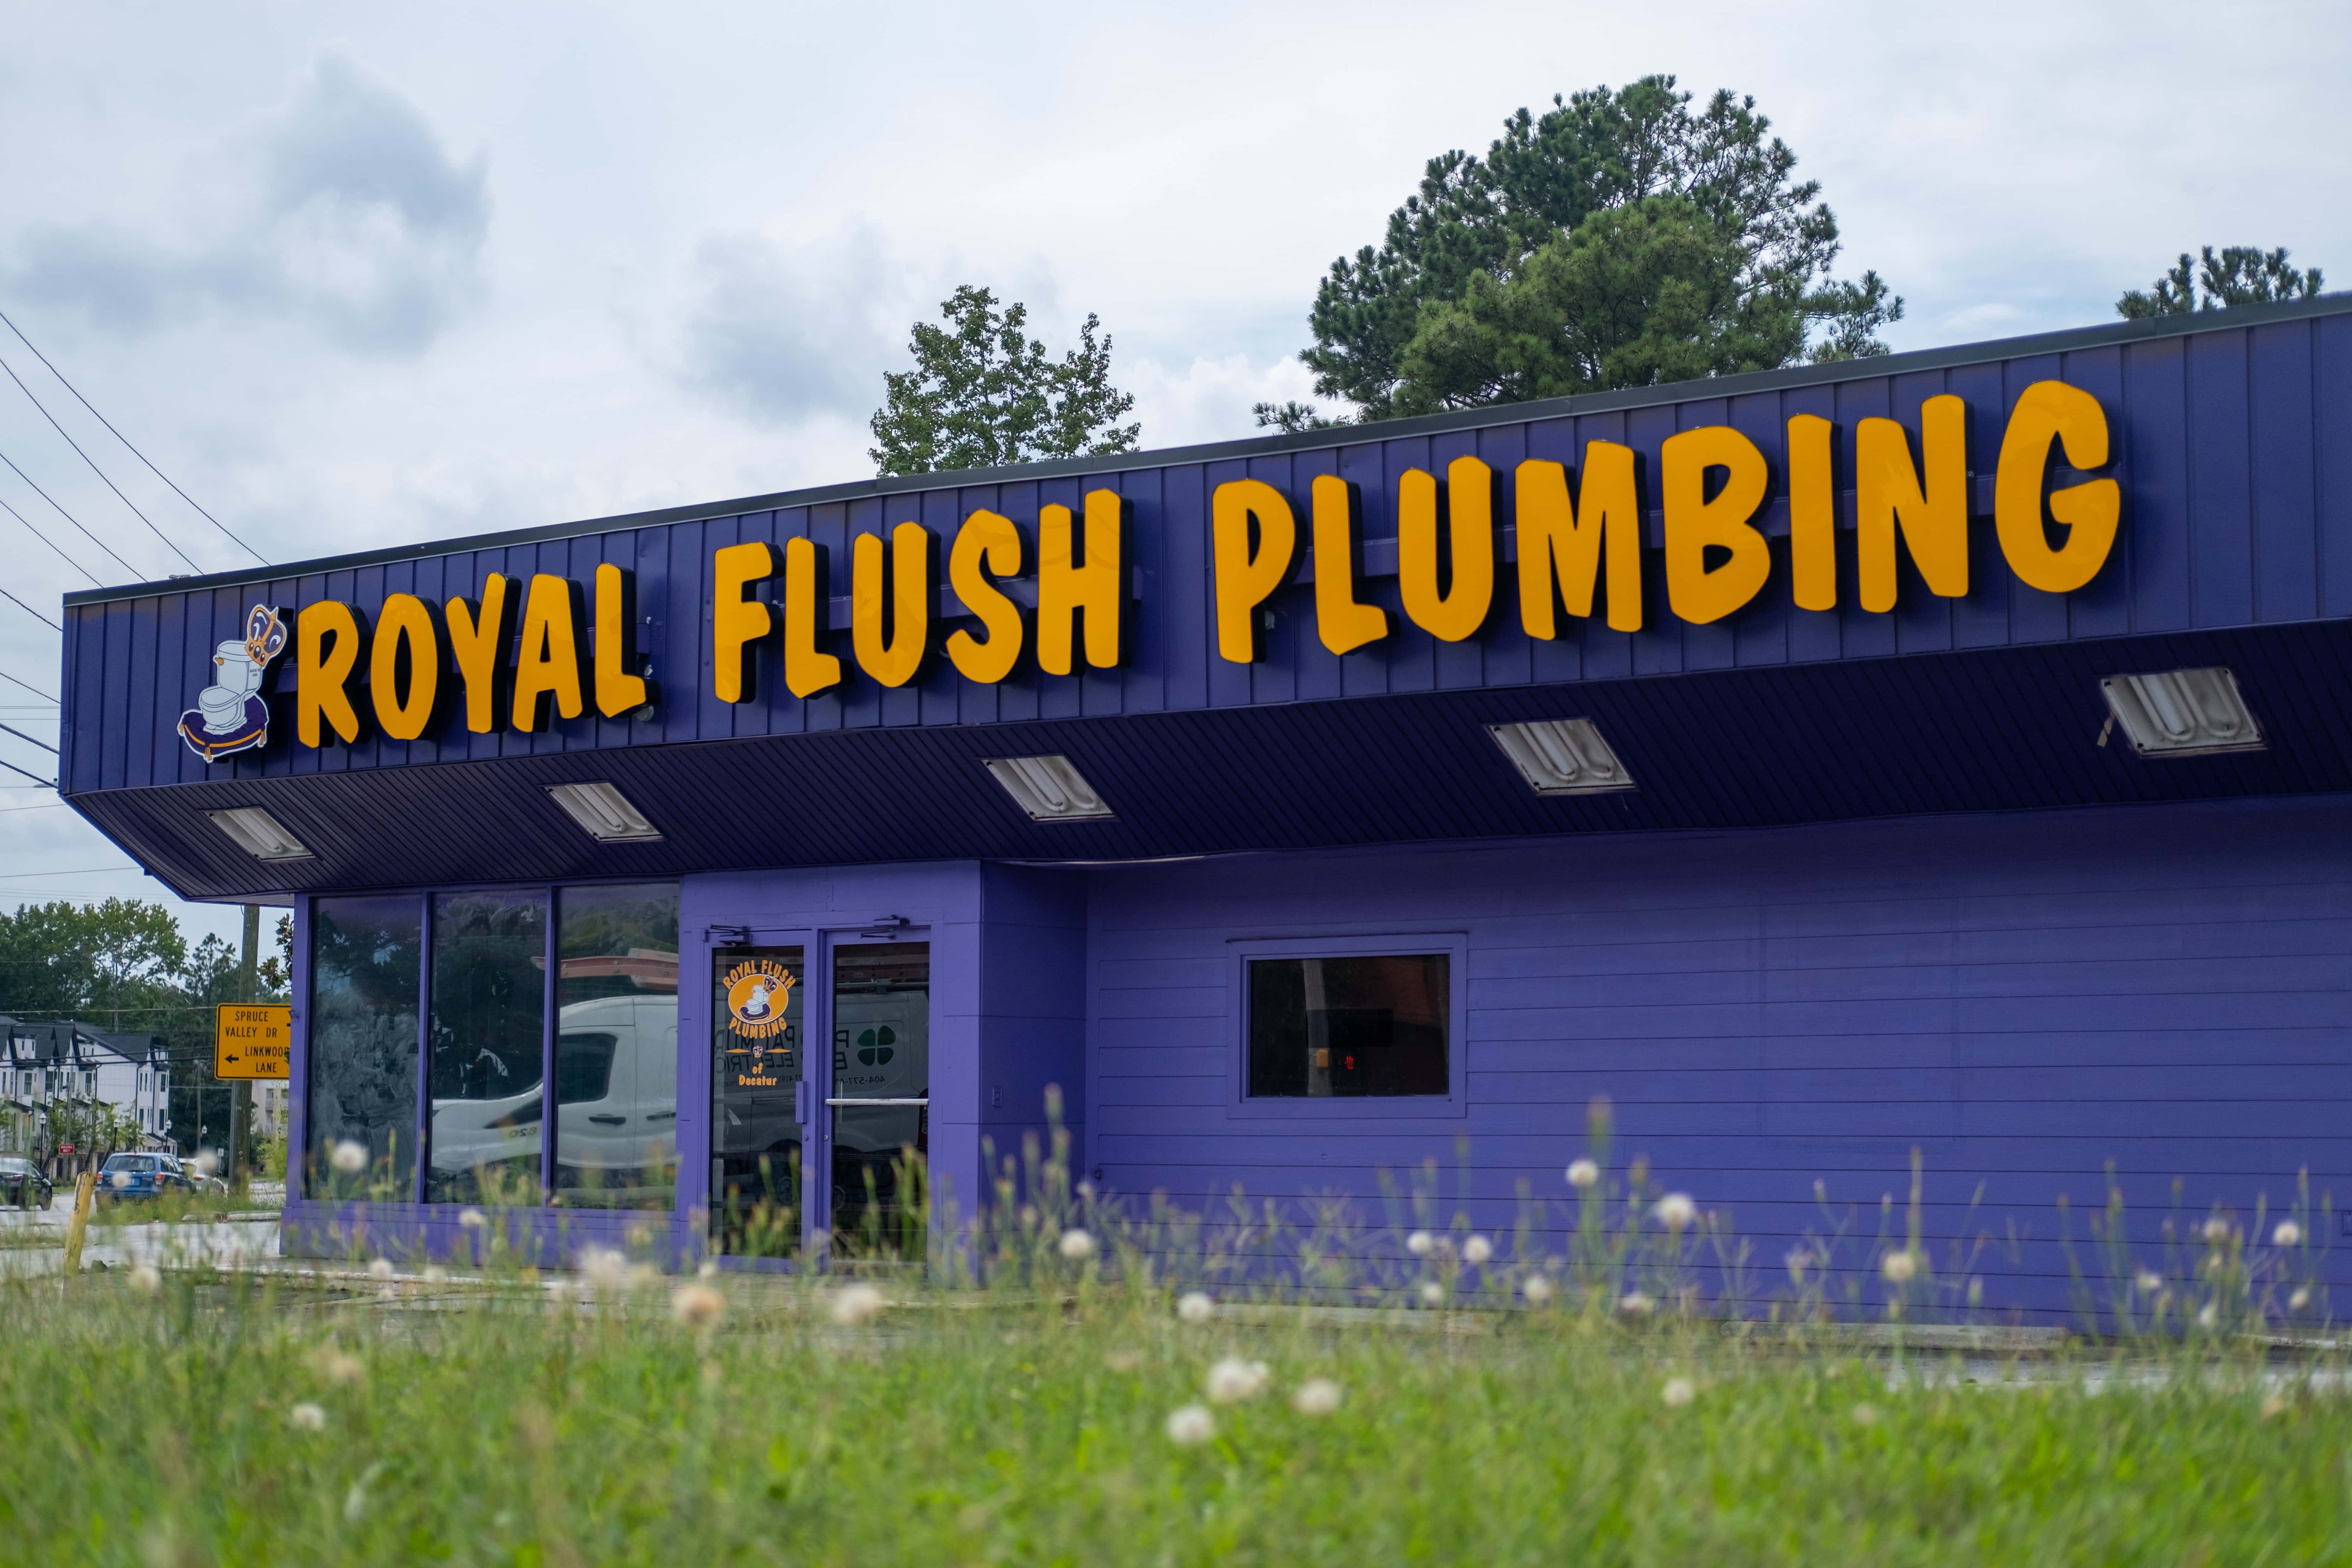 Royal Flush Plumbing Of Decatur, US, plumbing services